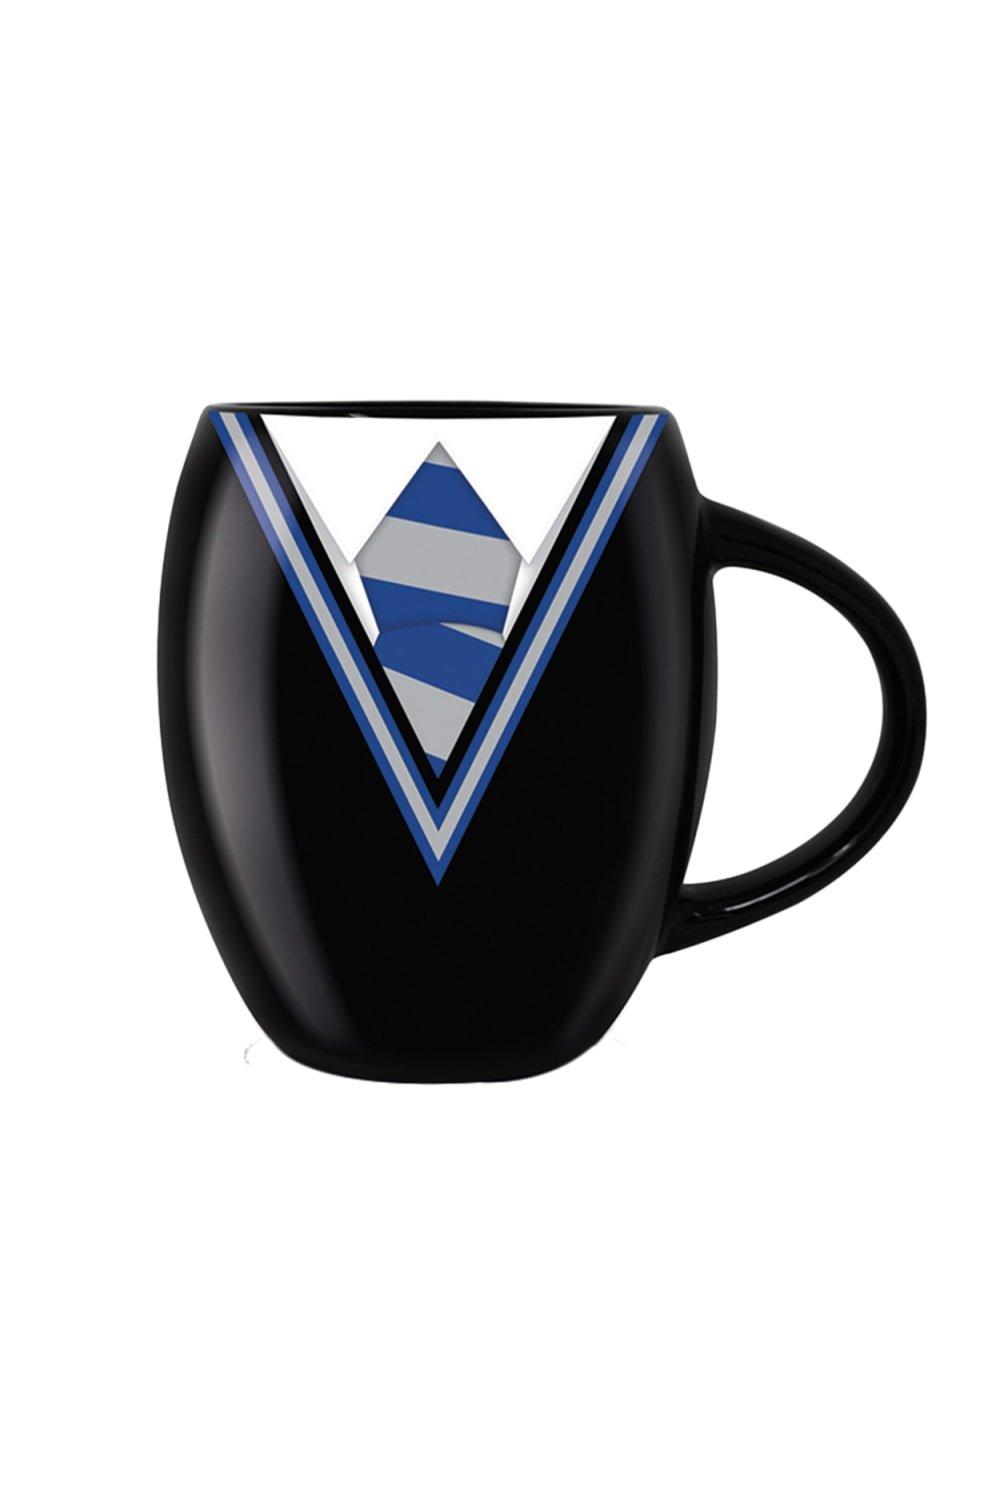 Photos - Mug / Cup Ravenclaw Uniform Oval Mug